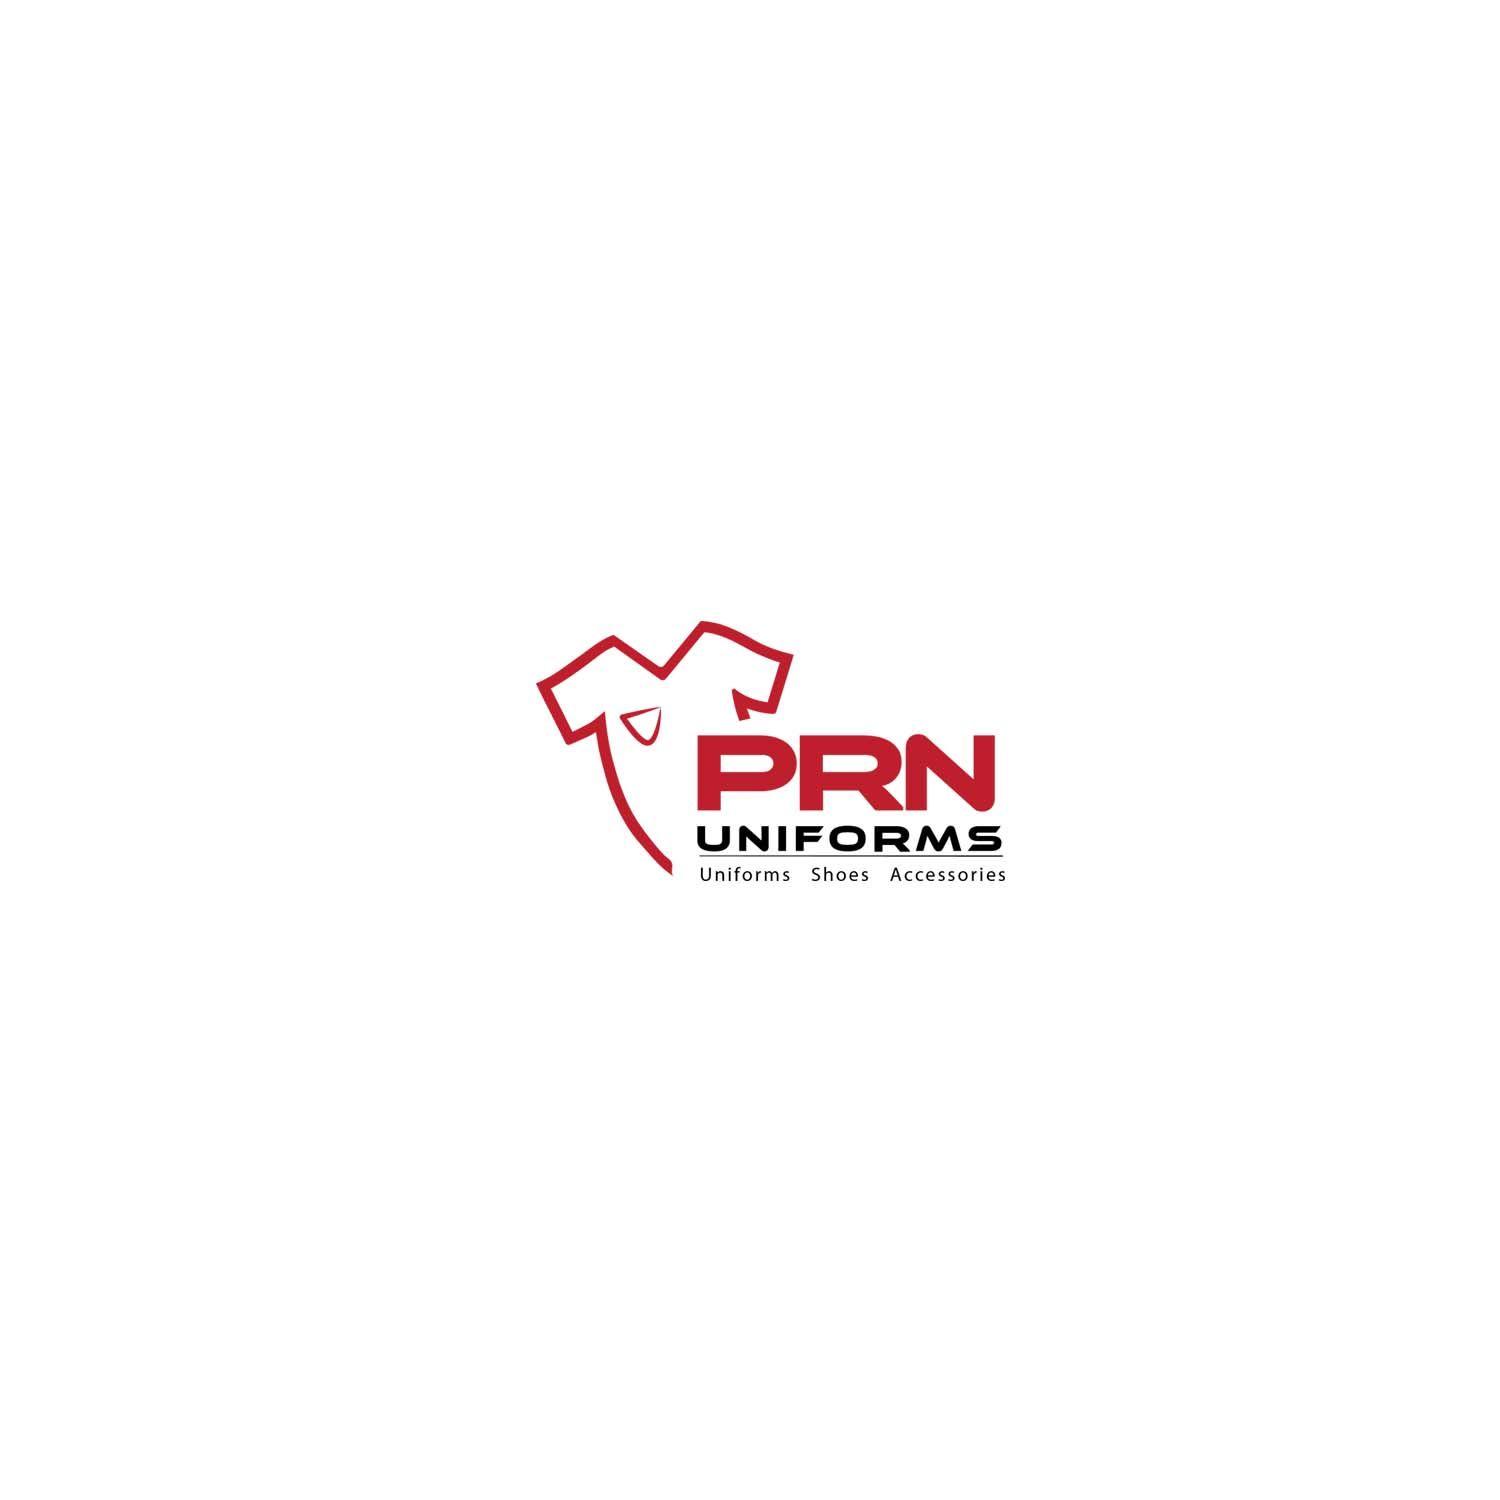 Uniform Logo - Professional, Upmarket, Retail Logo Design for PRN Uniforms Uniforms ...